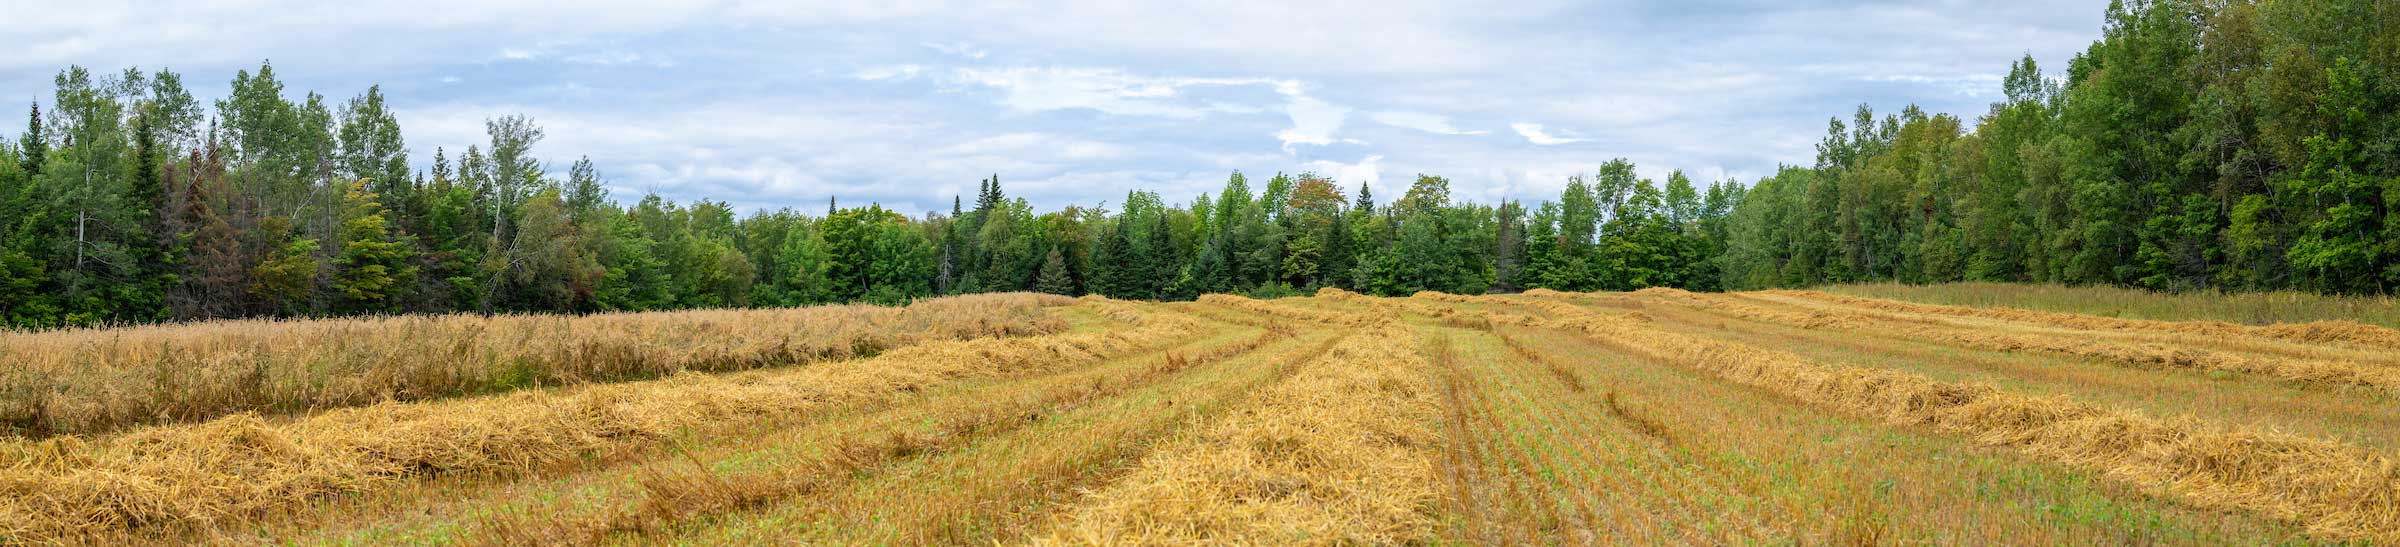 panorama of a farm field